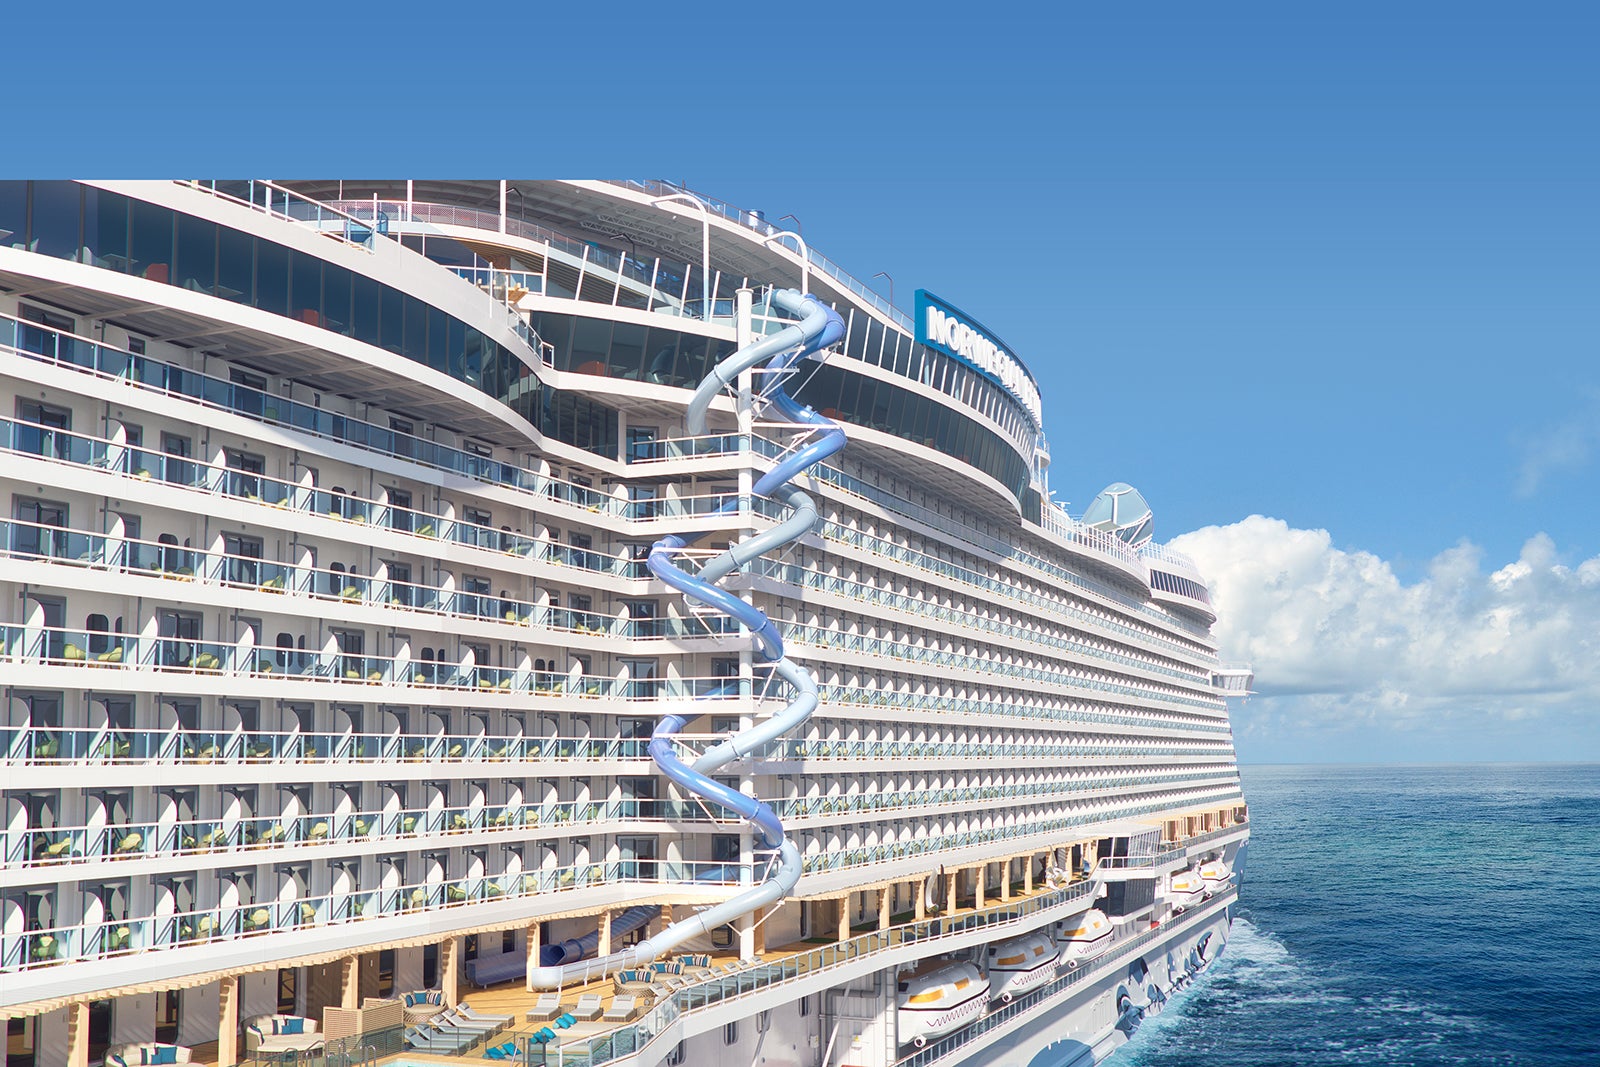 cruise ships companies hiring